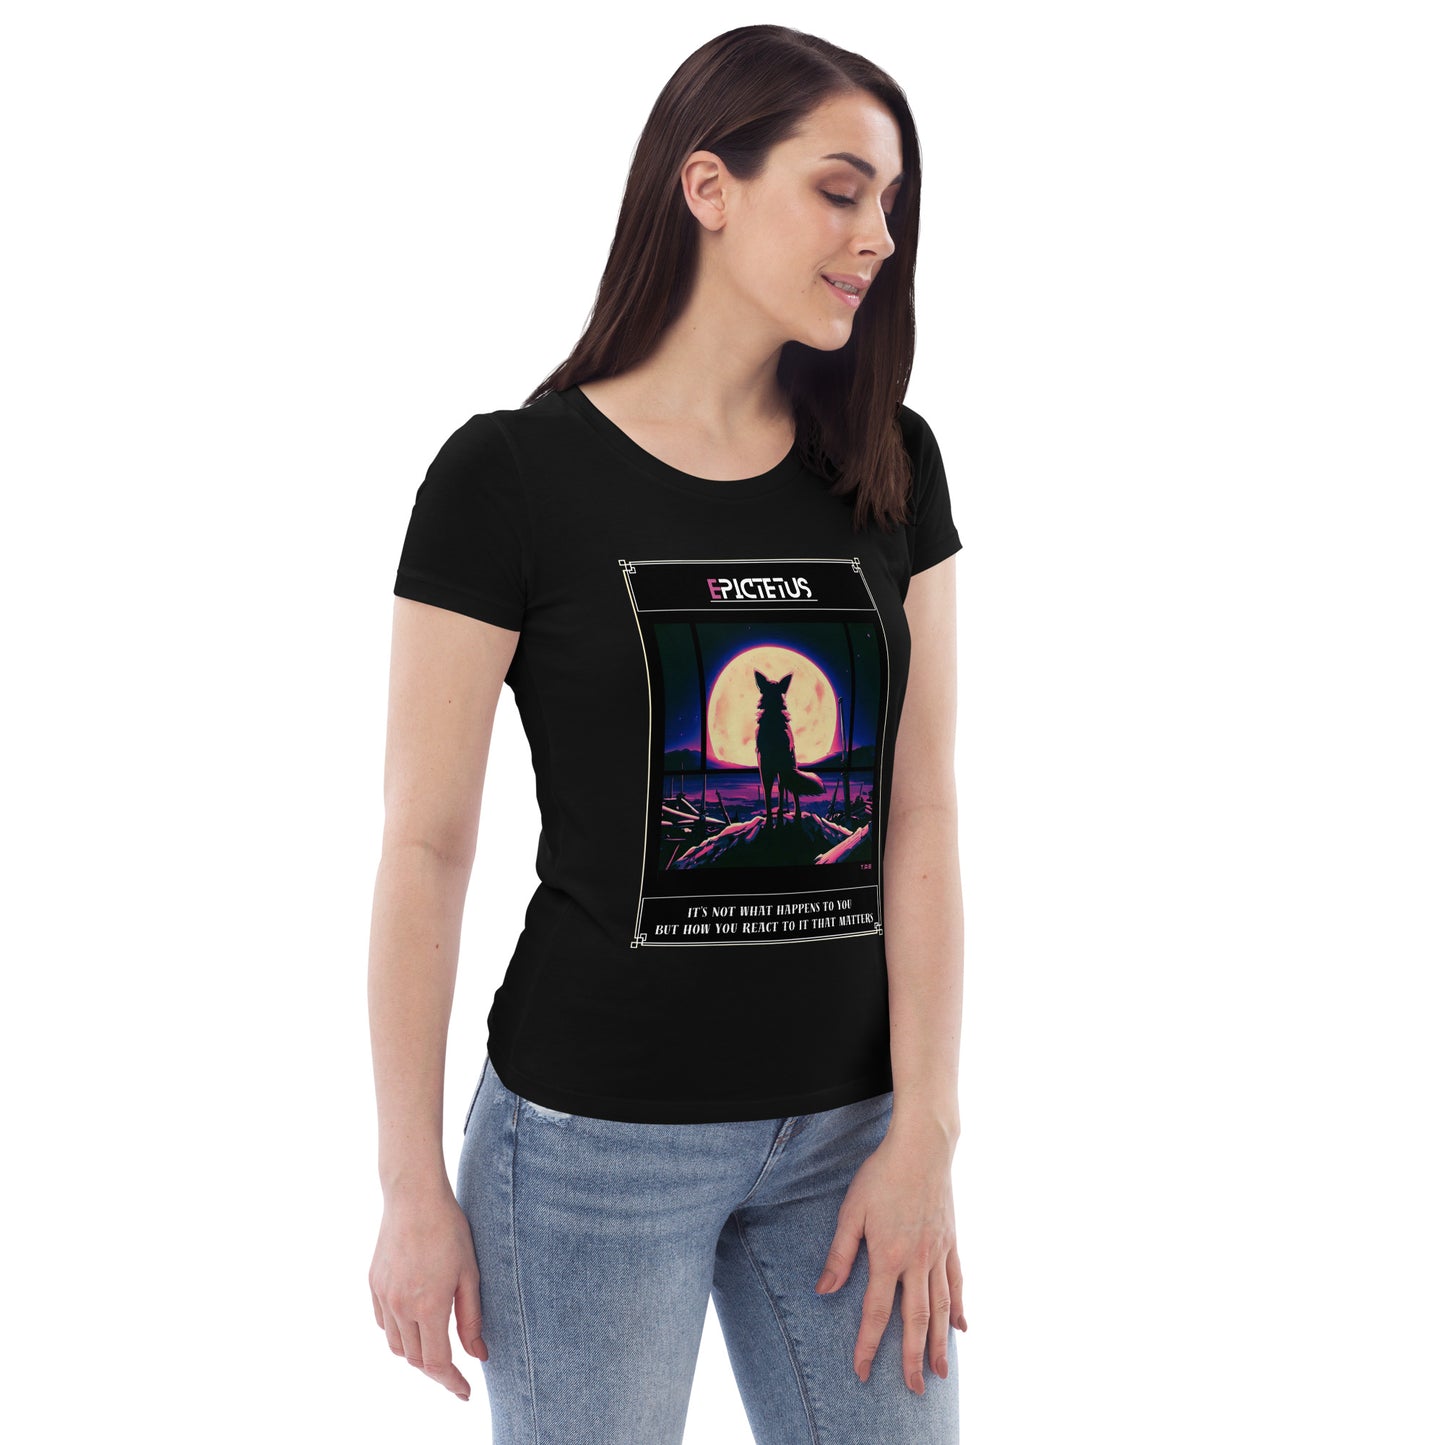 Women's Premium T-Shirt - Epictetus